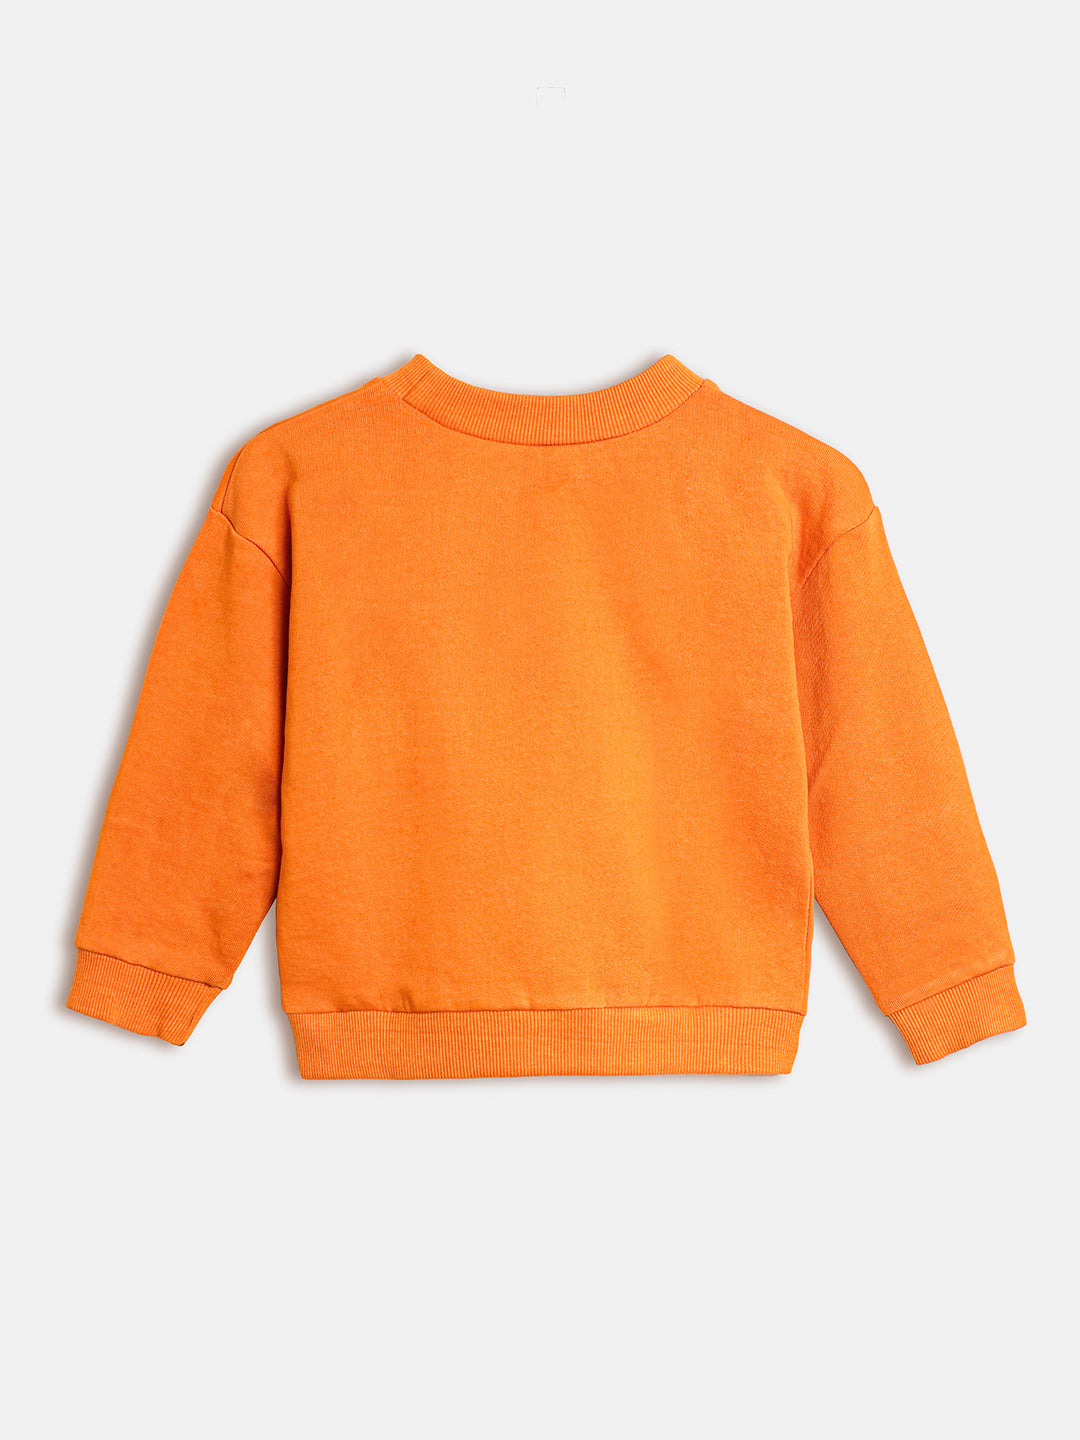 Dog chit chat dungaree with orange sweatshirt